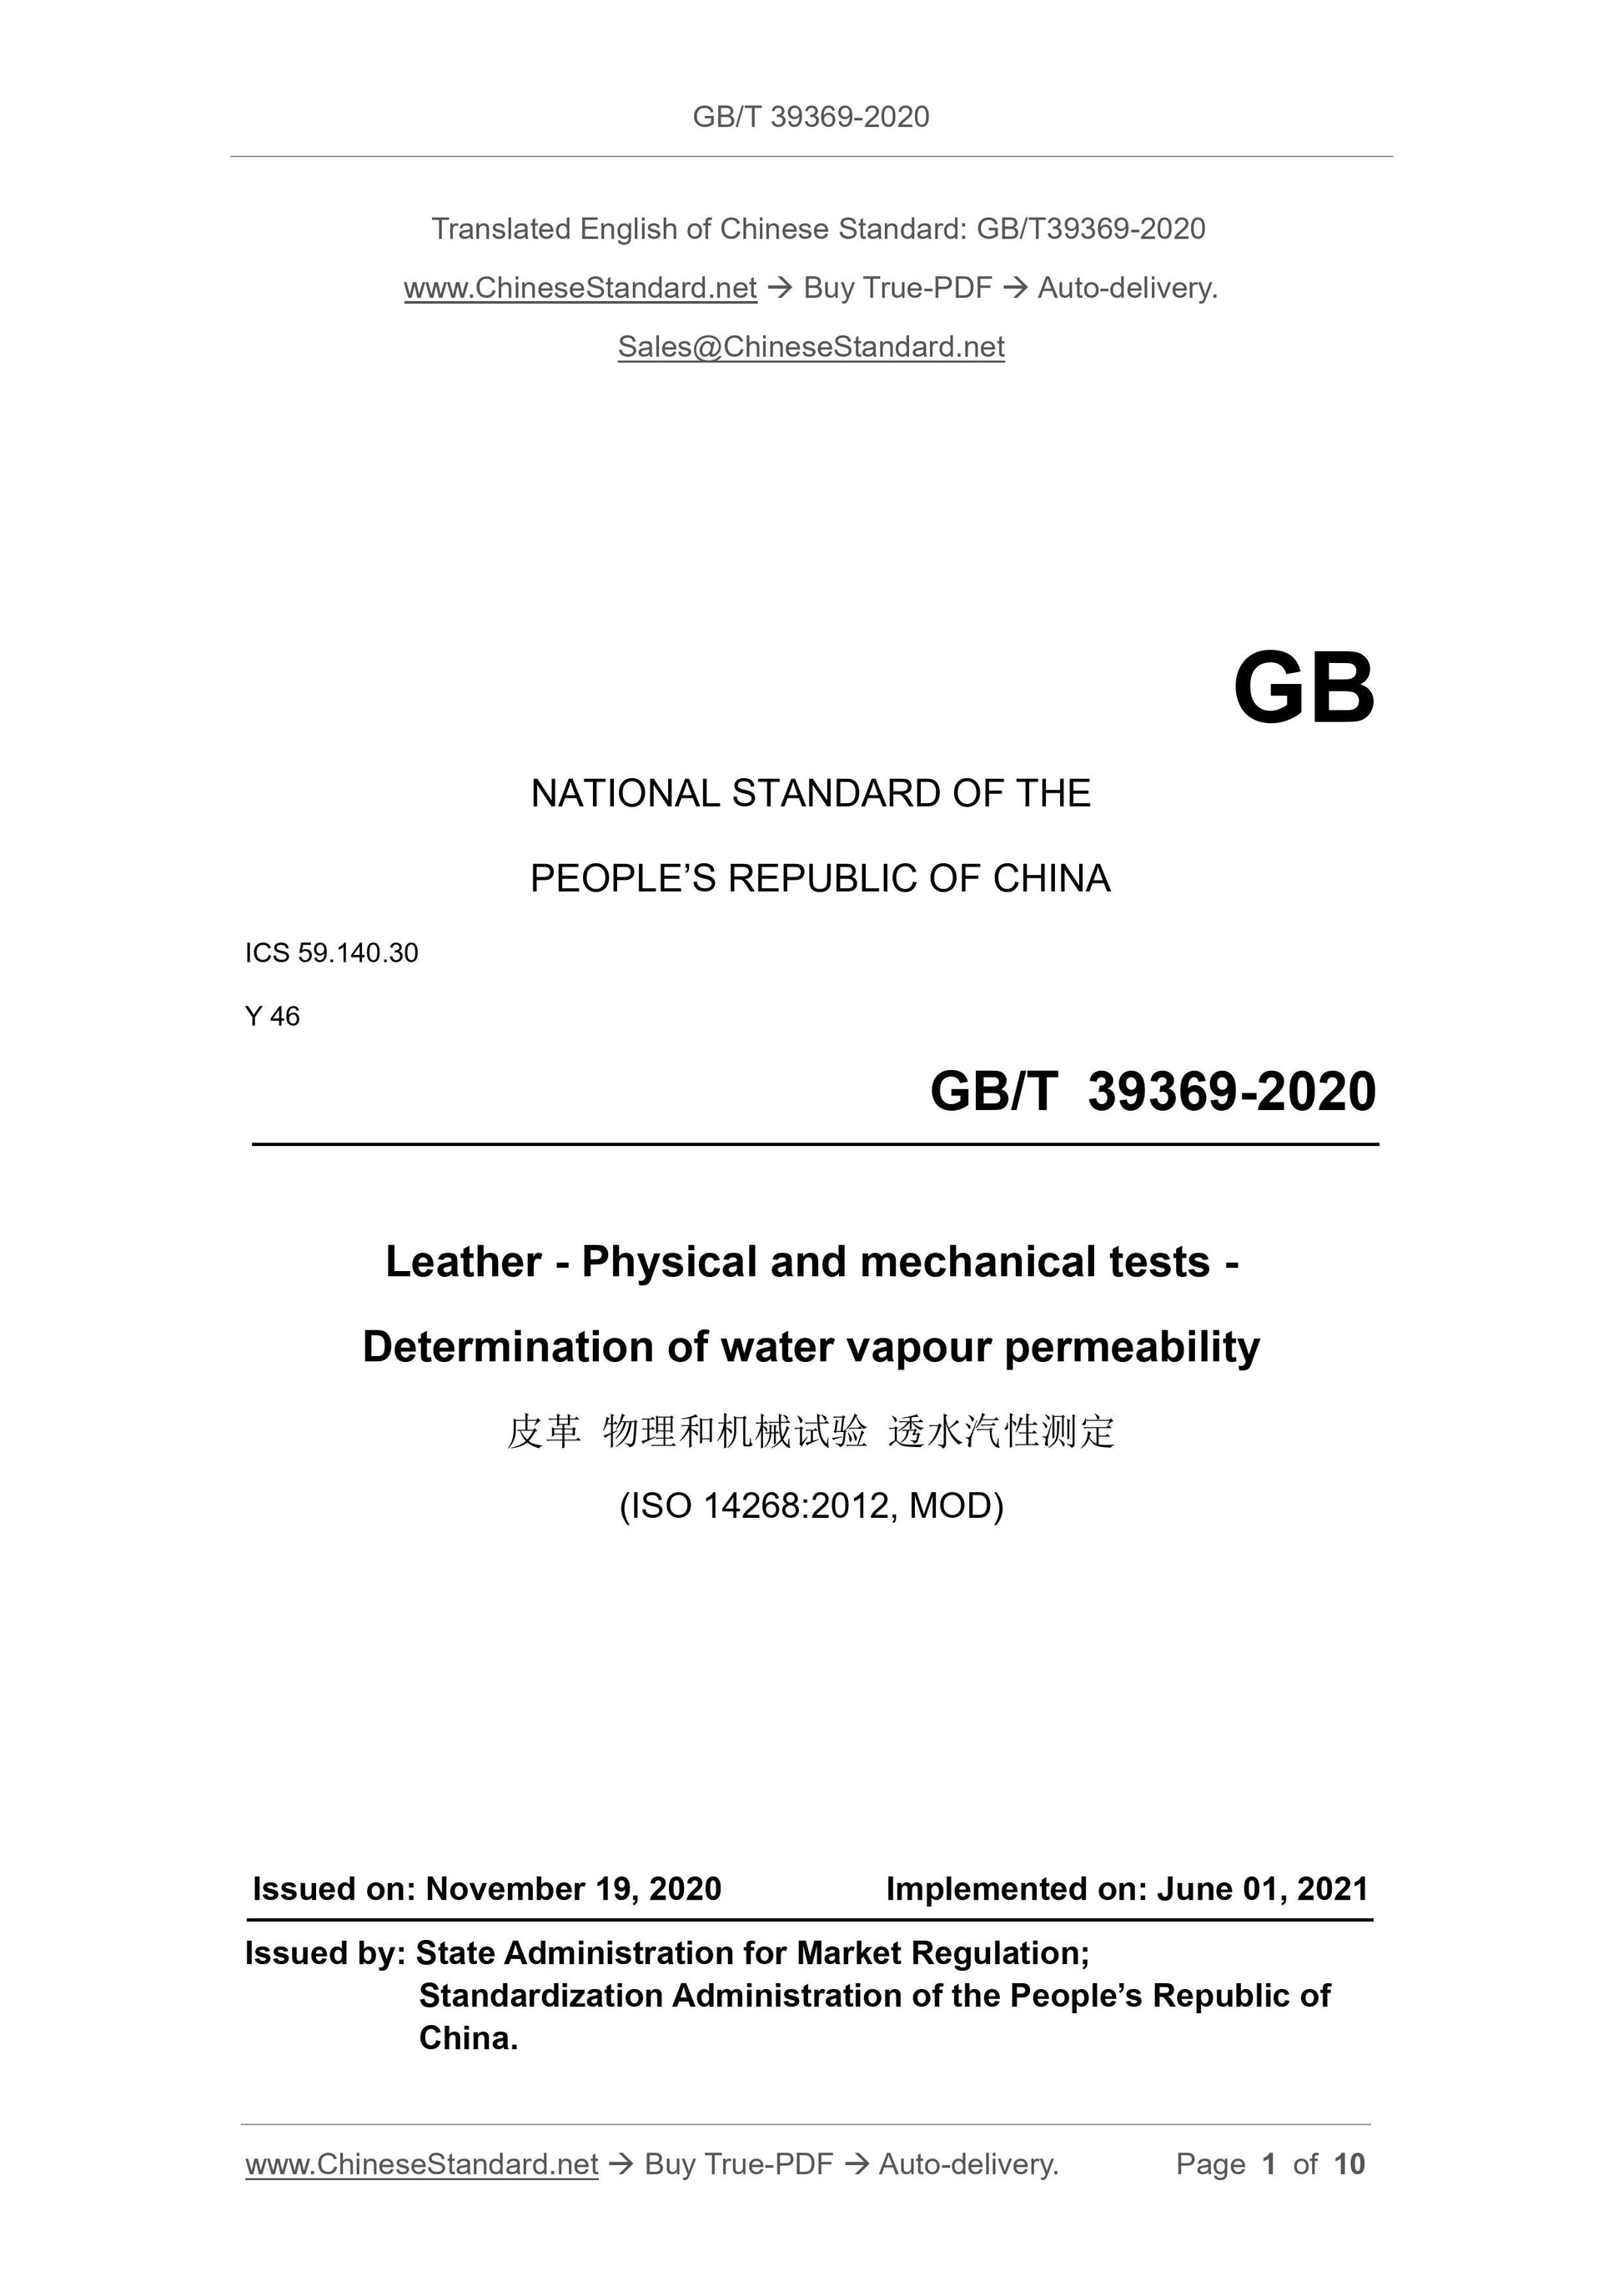 GBT39369-2020 Page 1